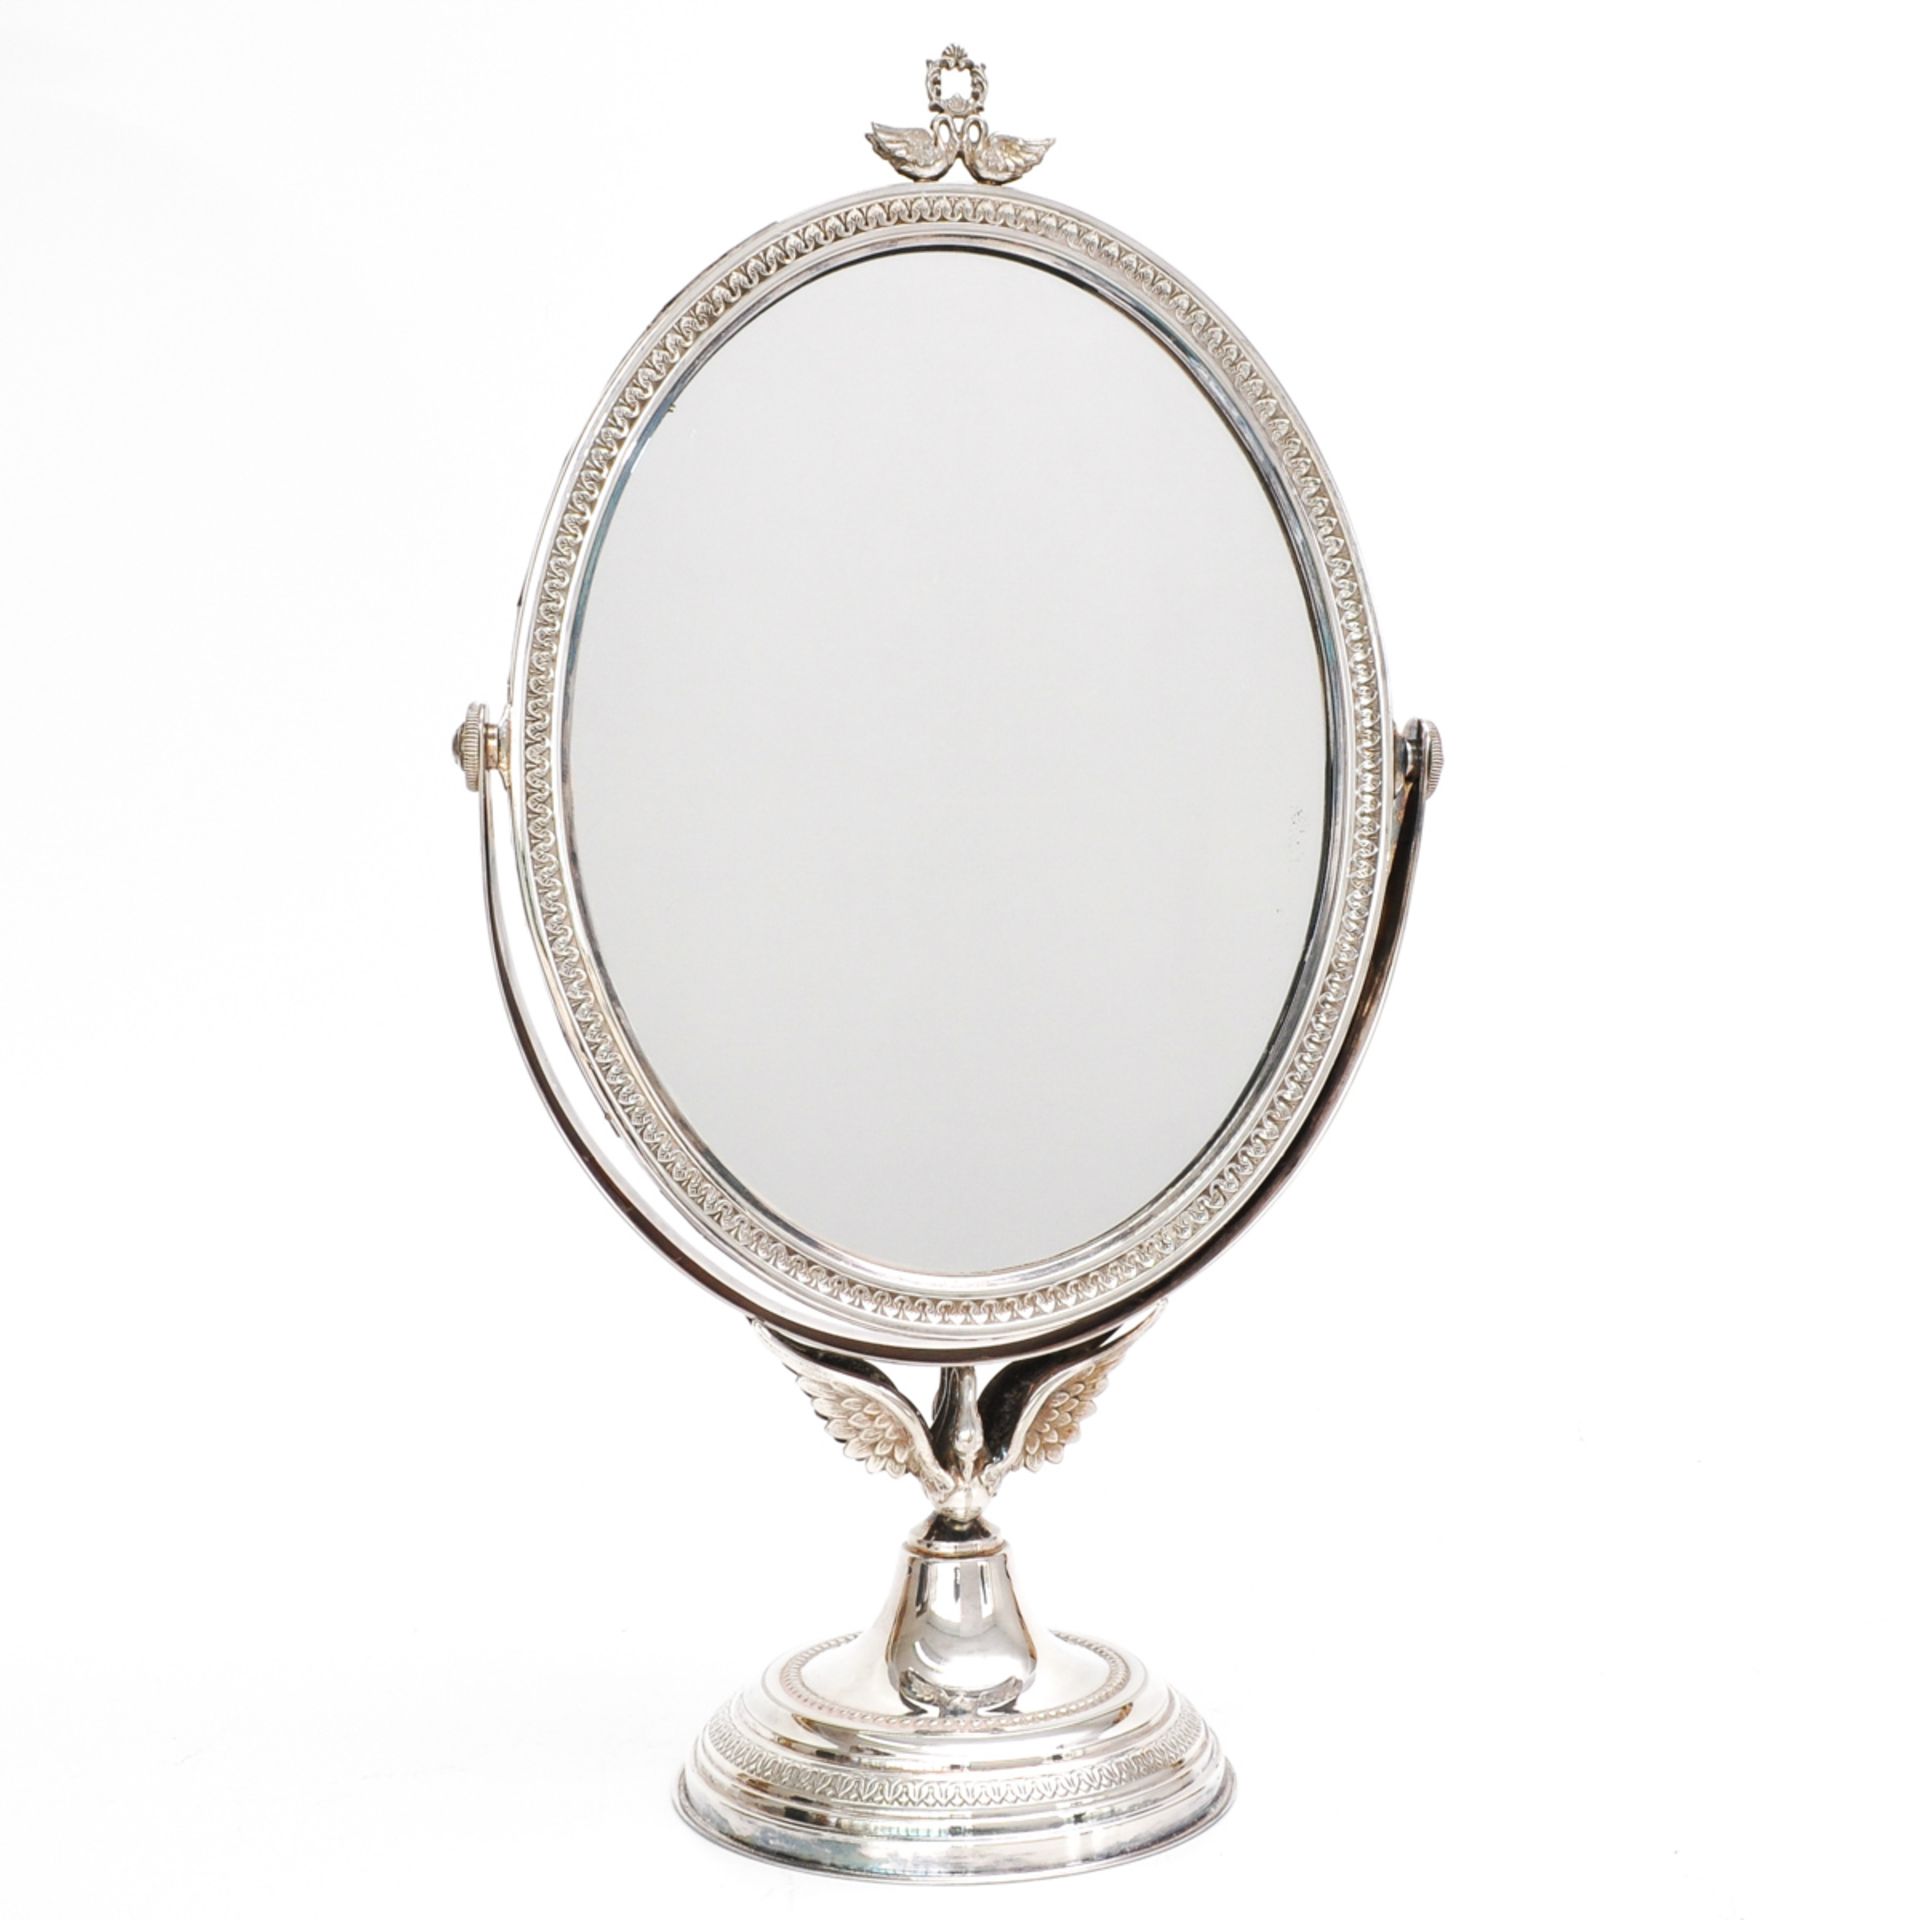 A Silver Plate Vanity Mirror